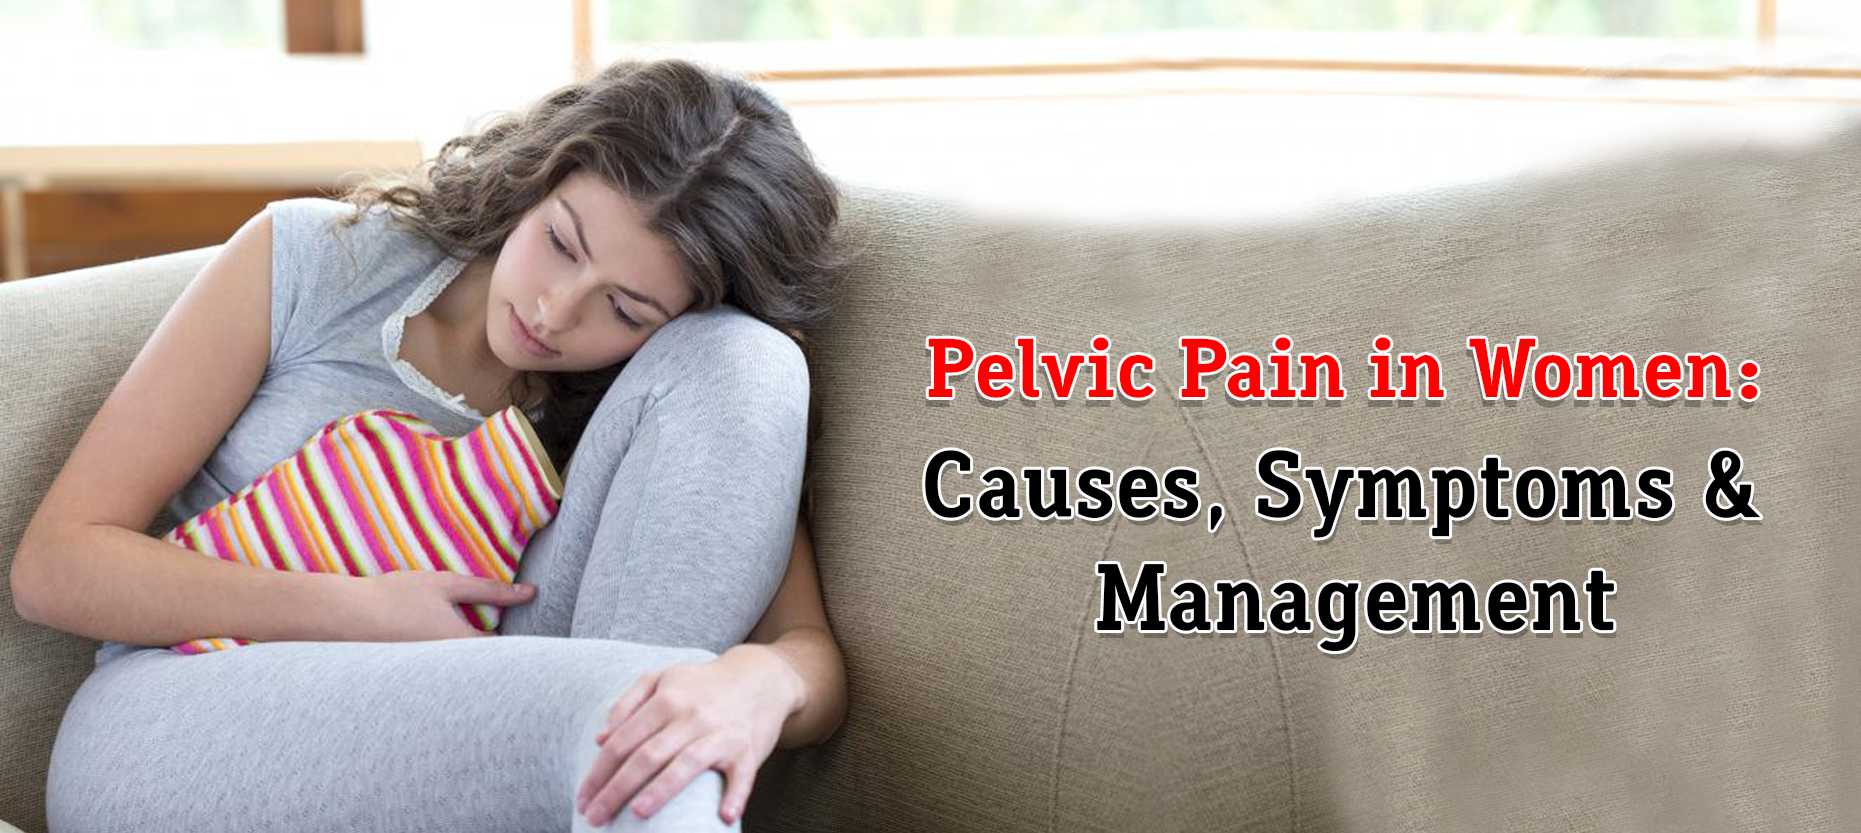 Pelvic Pain in Women: Causes, Symptoms & Management